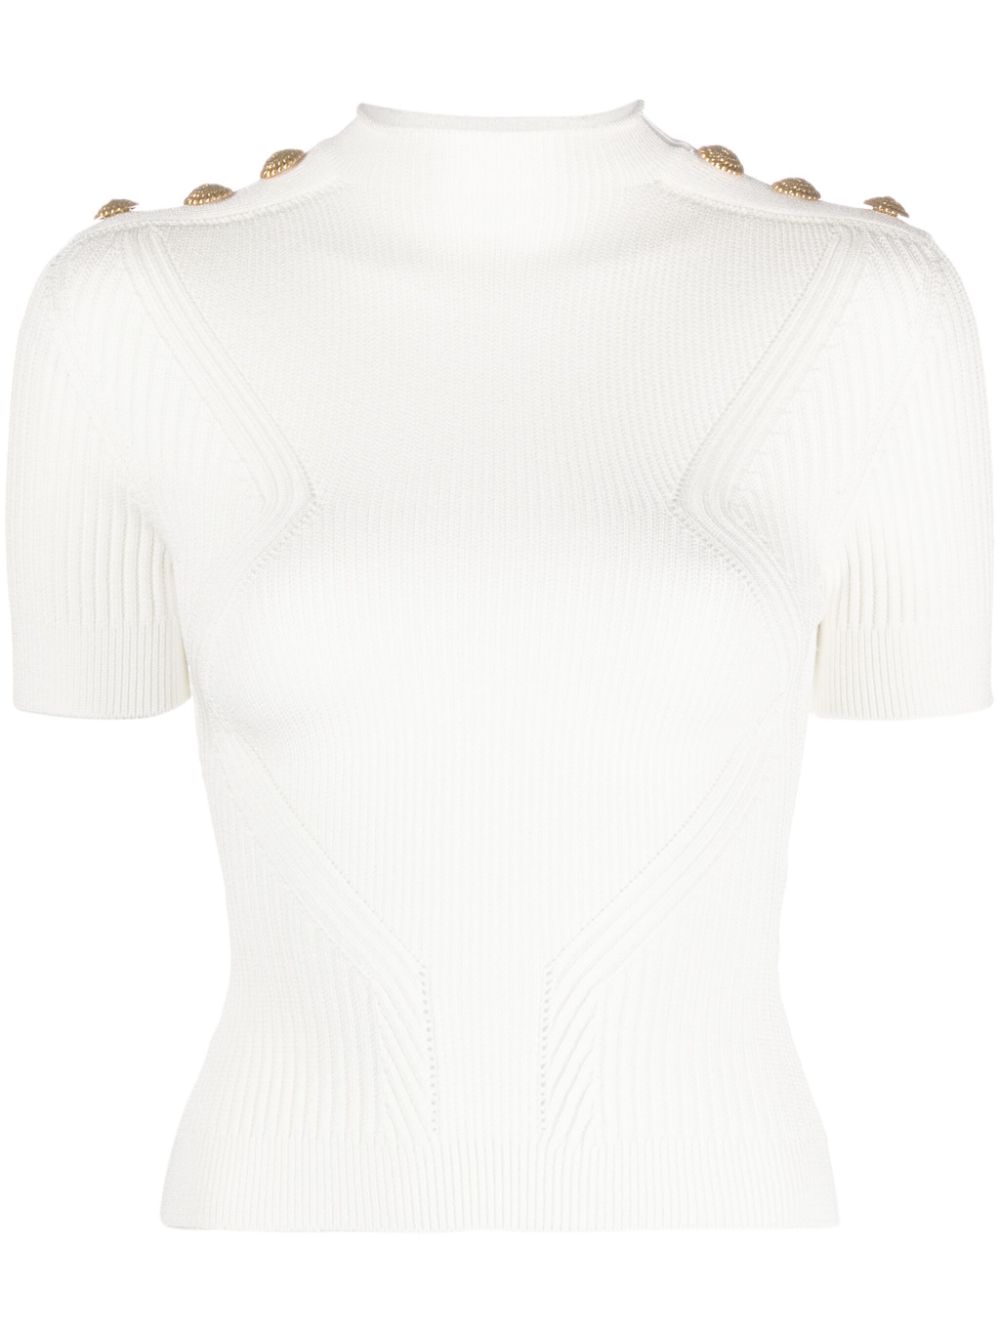 BALMAIN Ivory White Gold Knit Top for Women - FW23